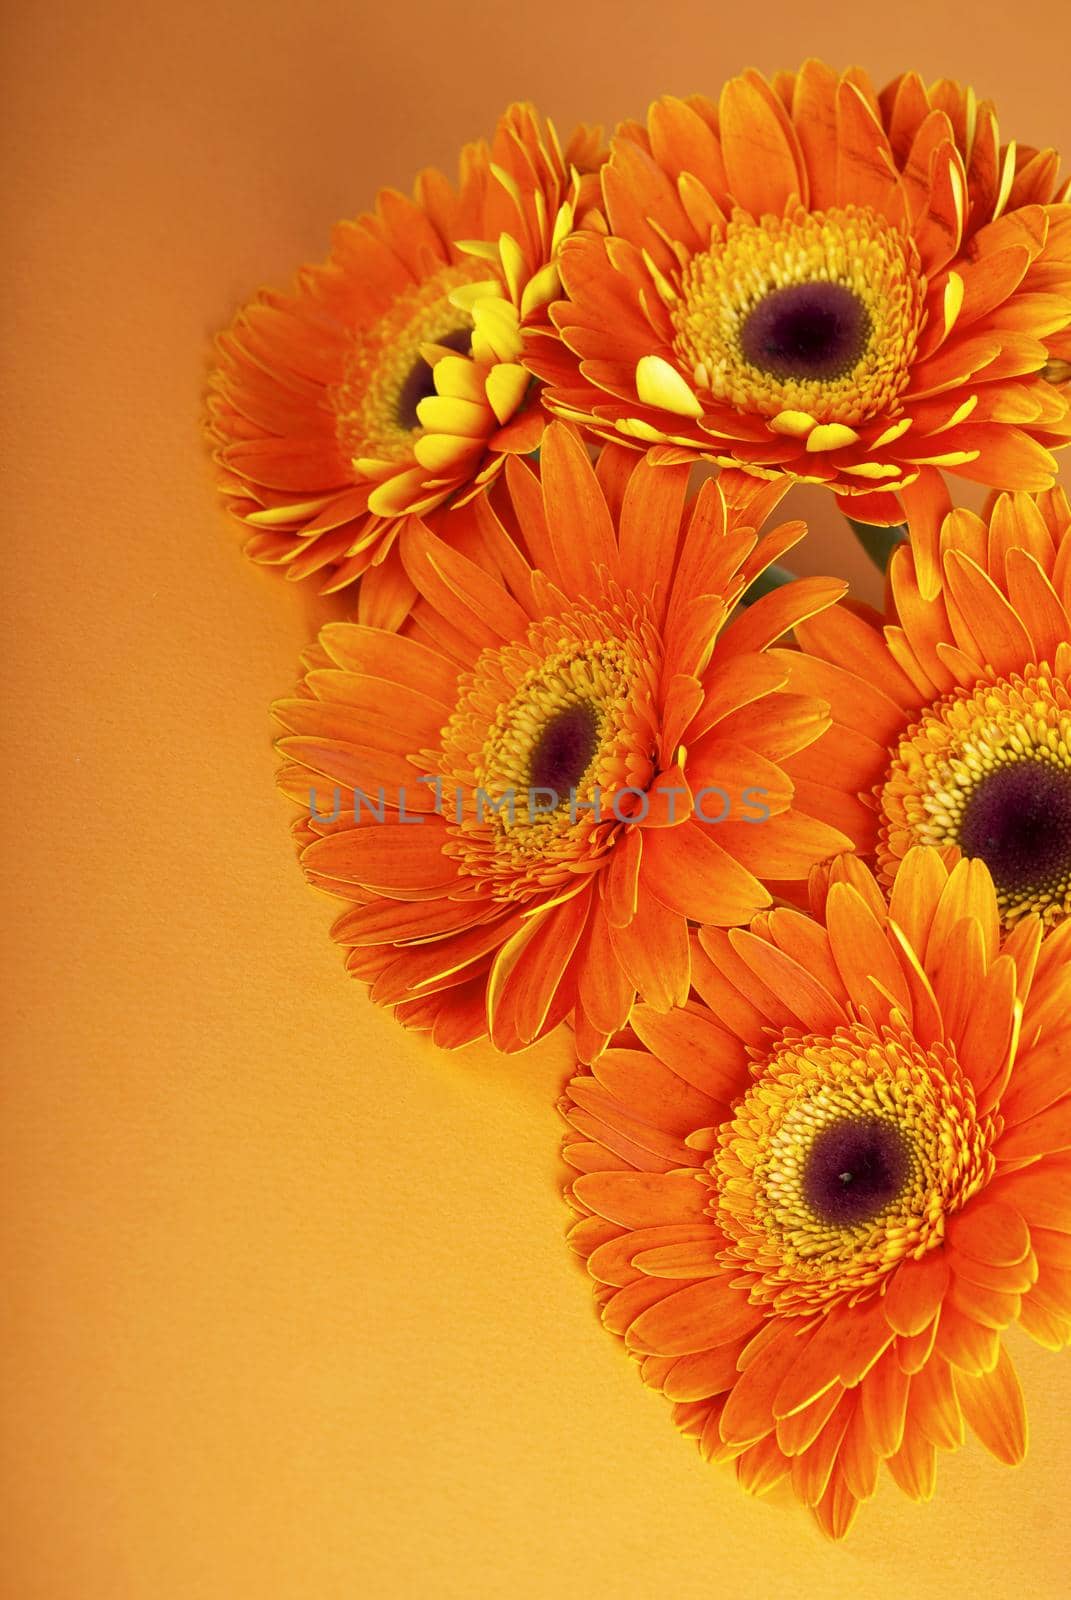 Daisy flowers close up over orange background